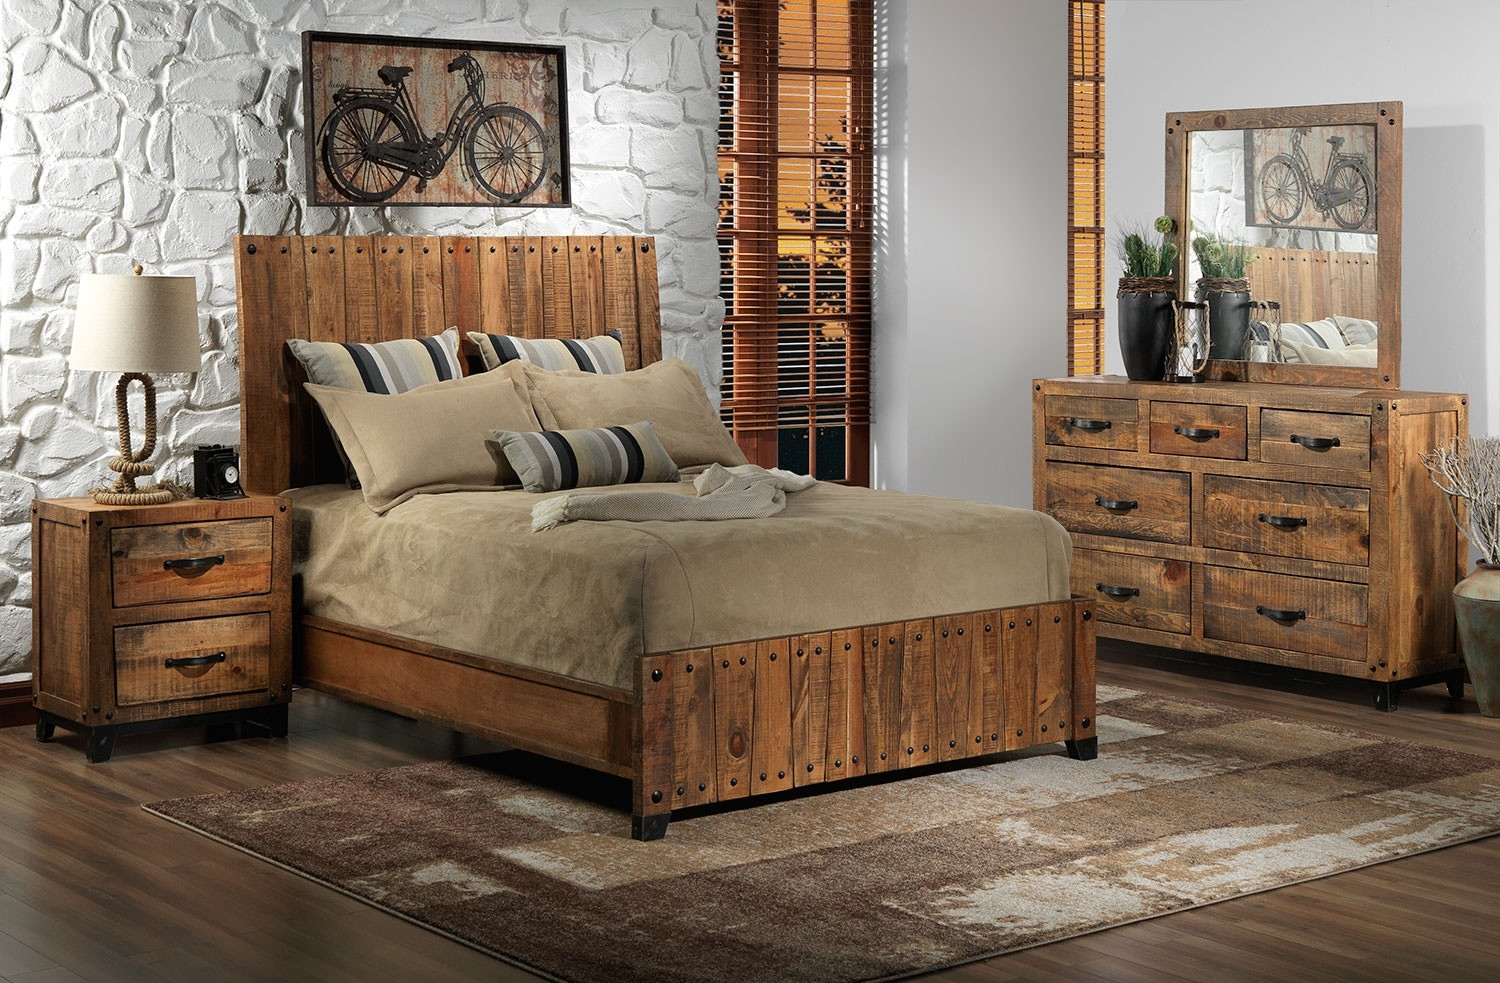 Rustic Pine Bedroom Furniture
 Maya Dresser Rustic Pine